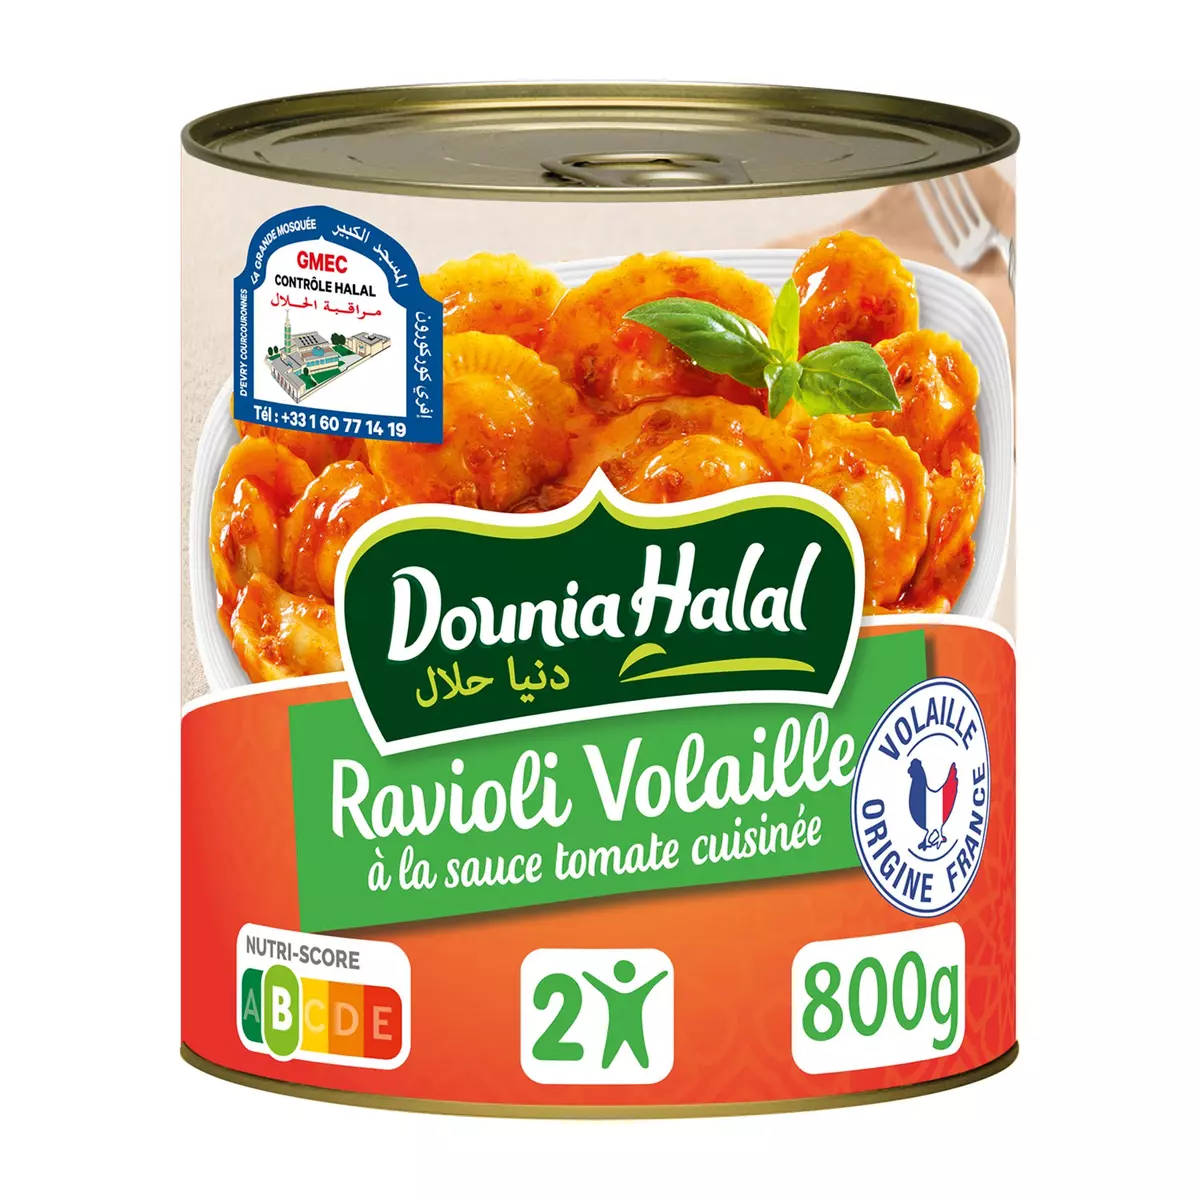 DOUNIA HALAL Ravioli volaille à la sauce tomate cuisinée 800g